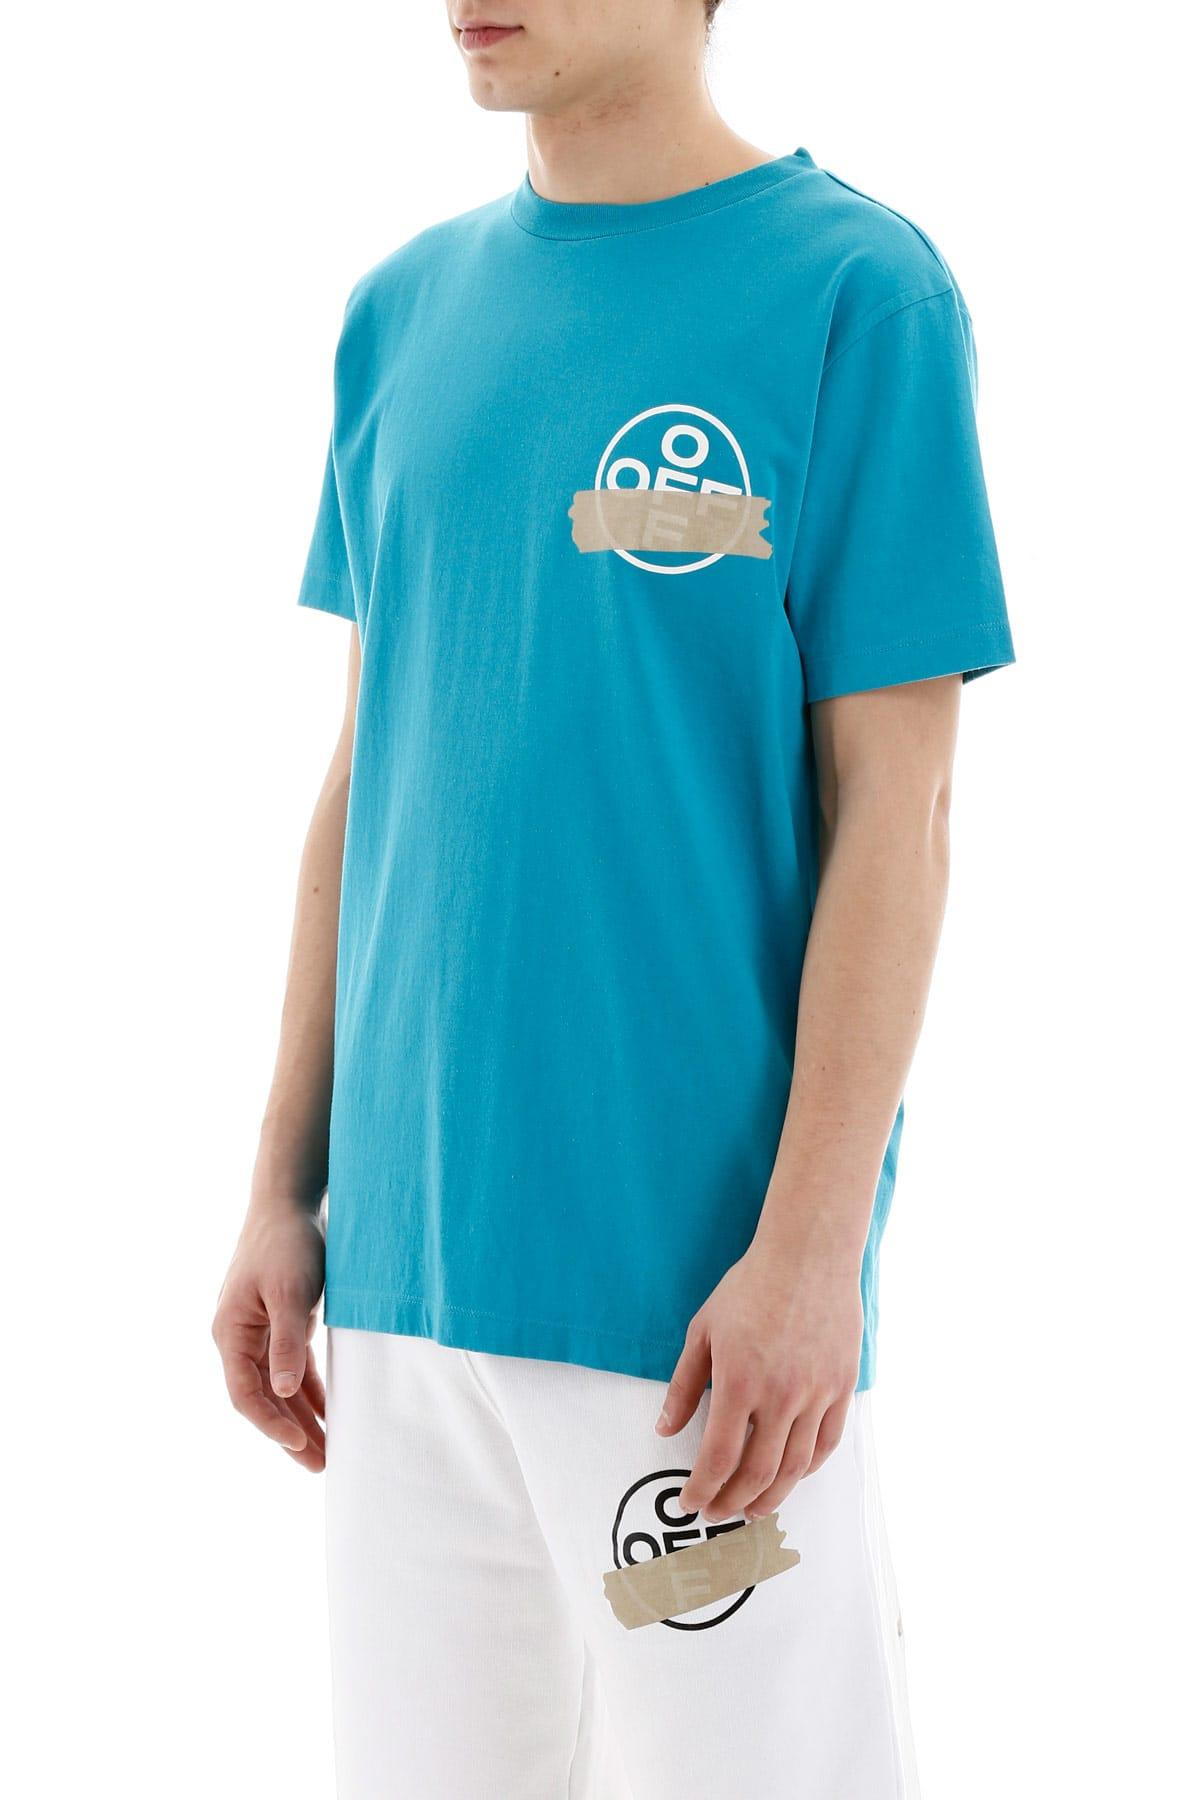 NWT OFF-WHITE C/O VIRGIL ABLOH Blue Graffiti Pupp Skate T-shirt Size L  $1480